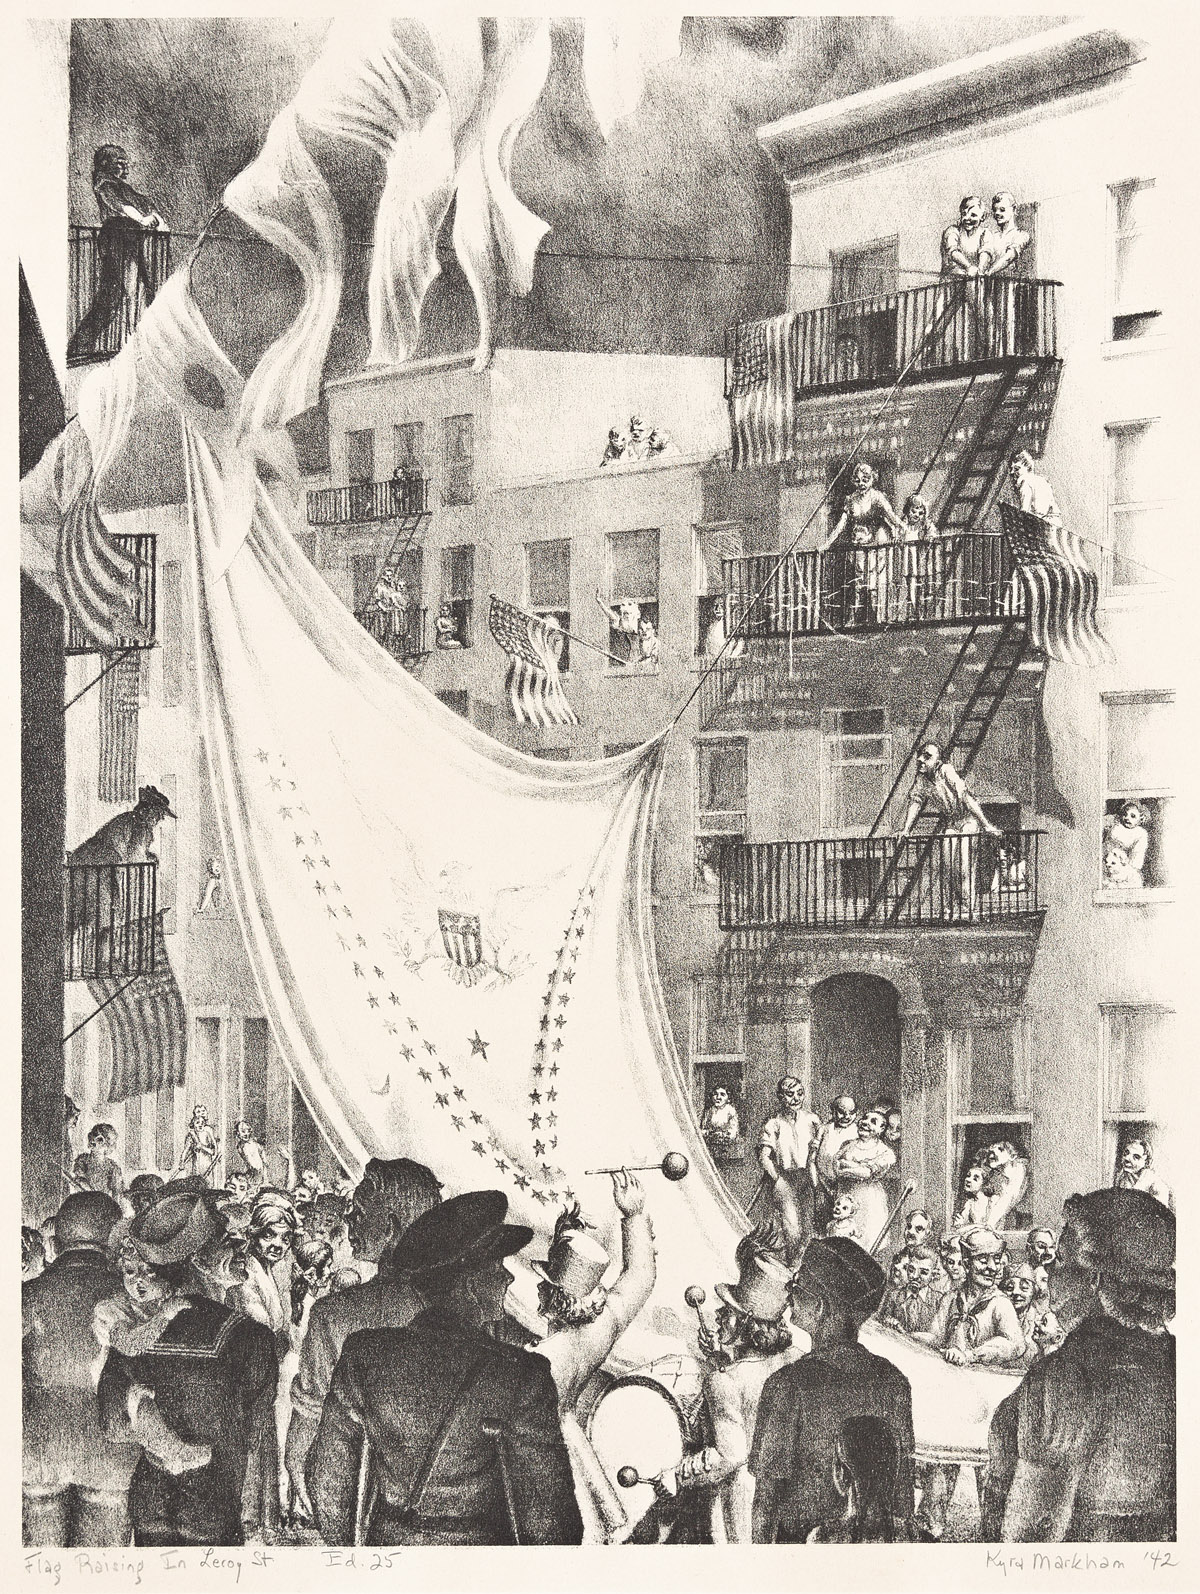 KYRA MARKHAM (1891-1967) Flag Raising in Leroy Street.